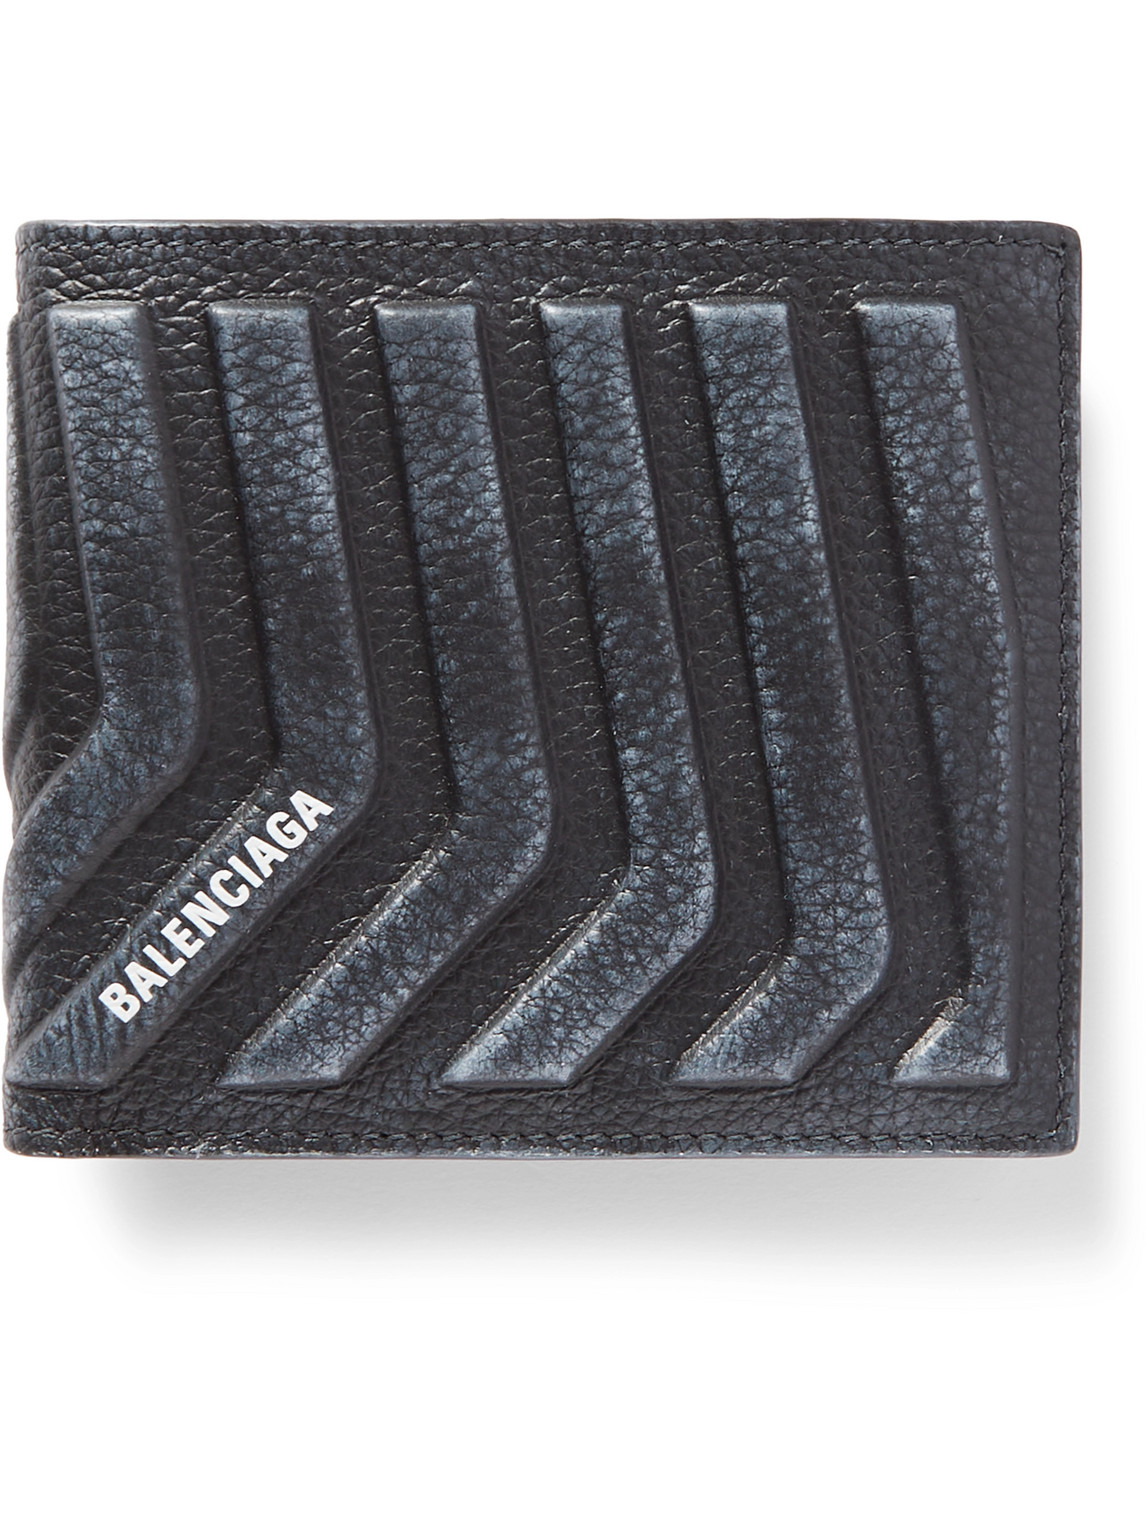 Balenciaga Logo-print Full-grain Leather Billfold Wallet In Black